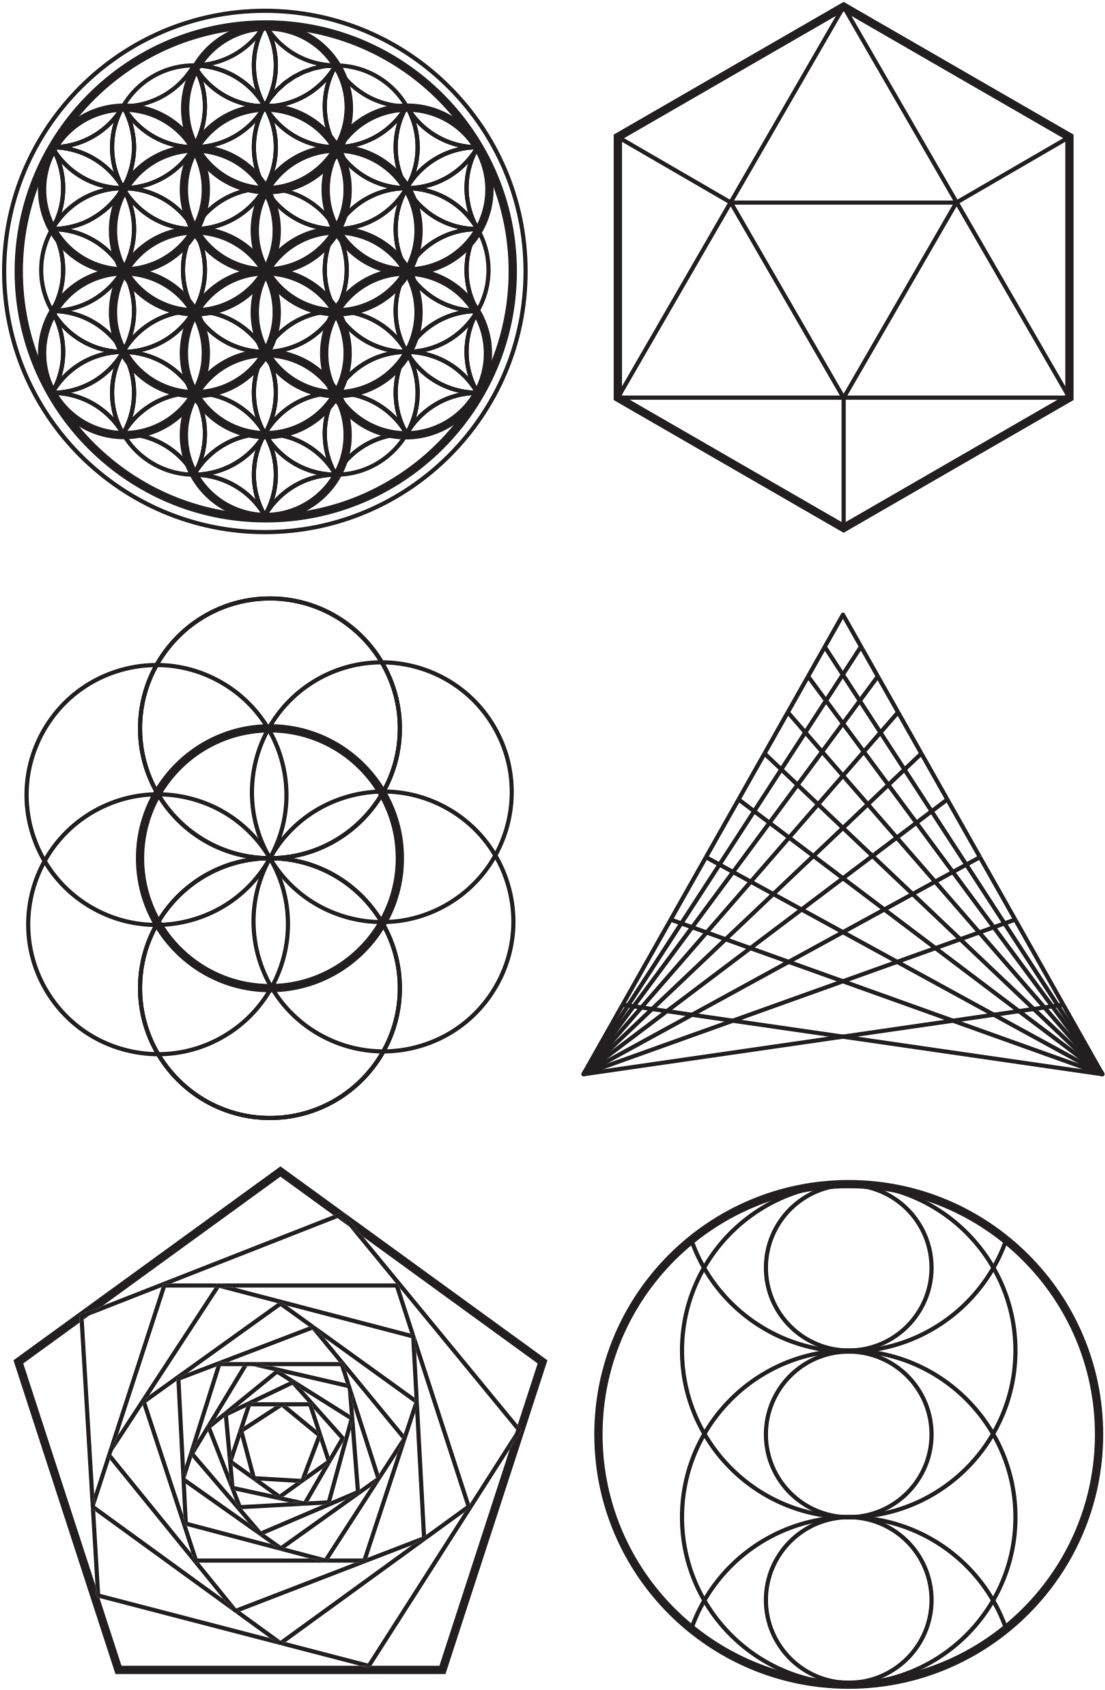 Sacred Geometry Vector Set